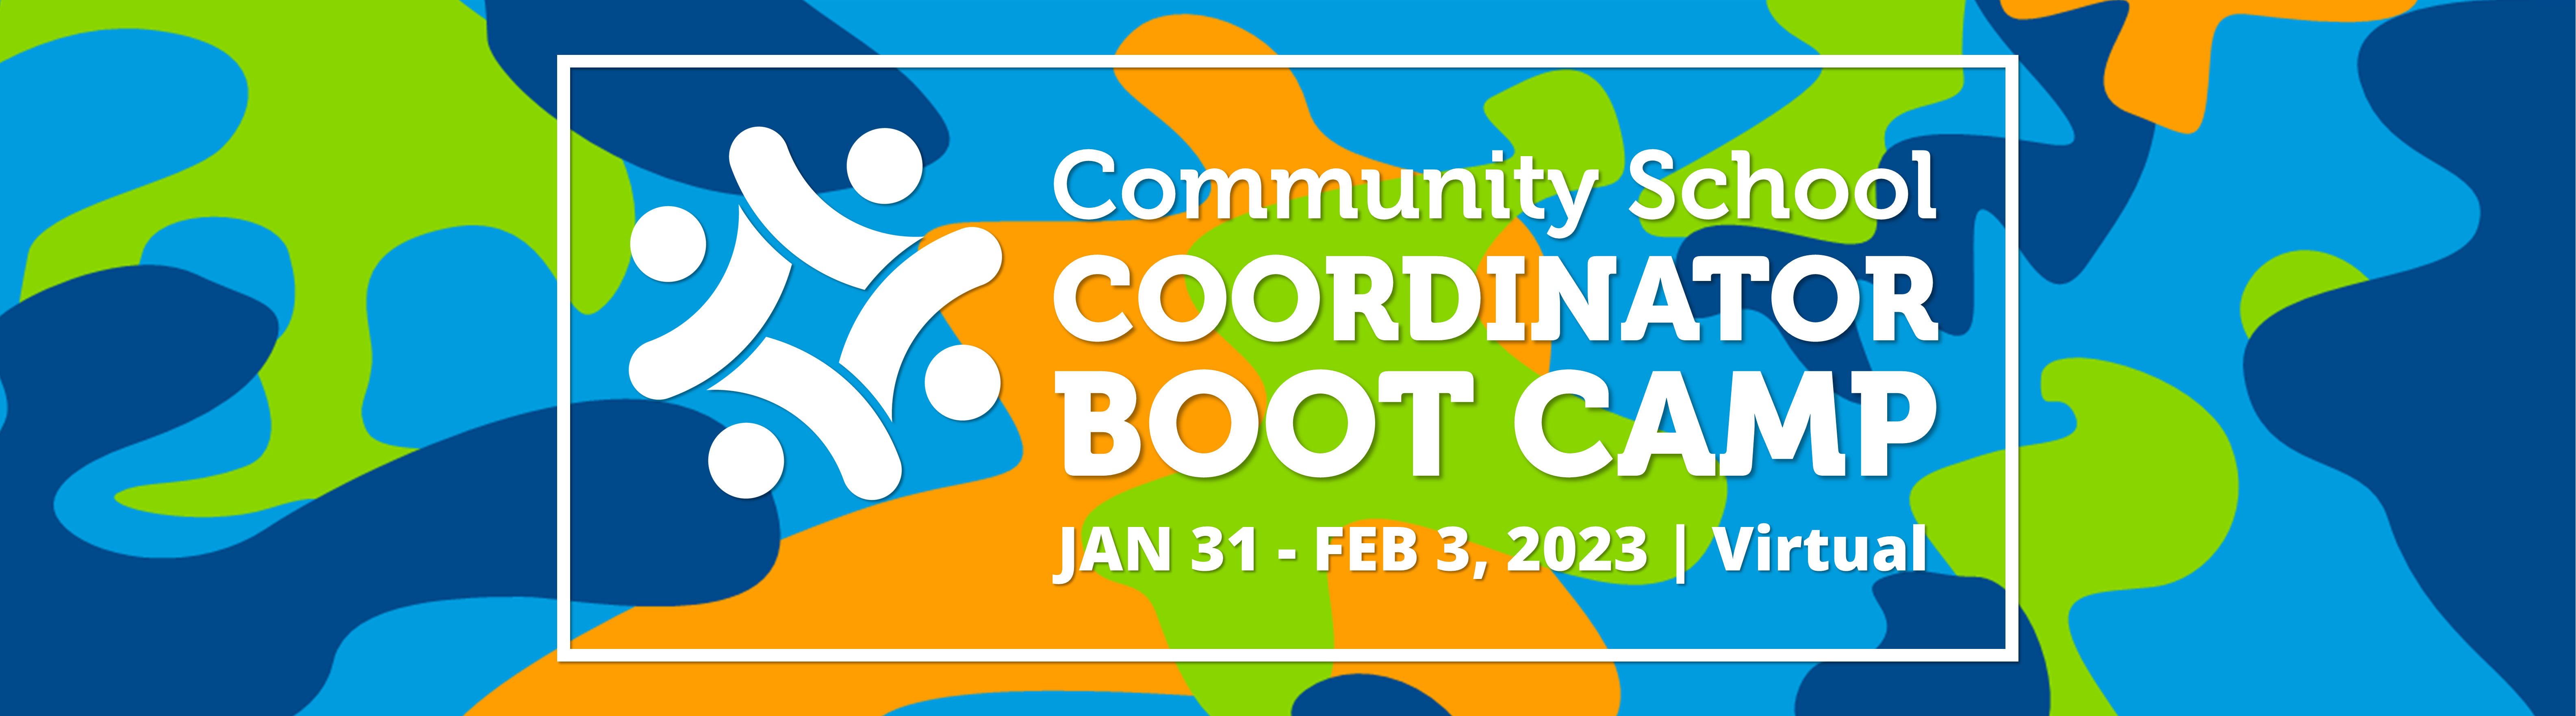 Community School Coordinator Boot Camp January 2023